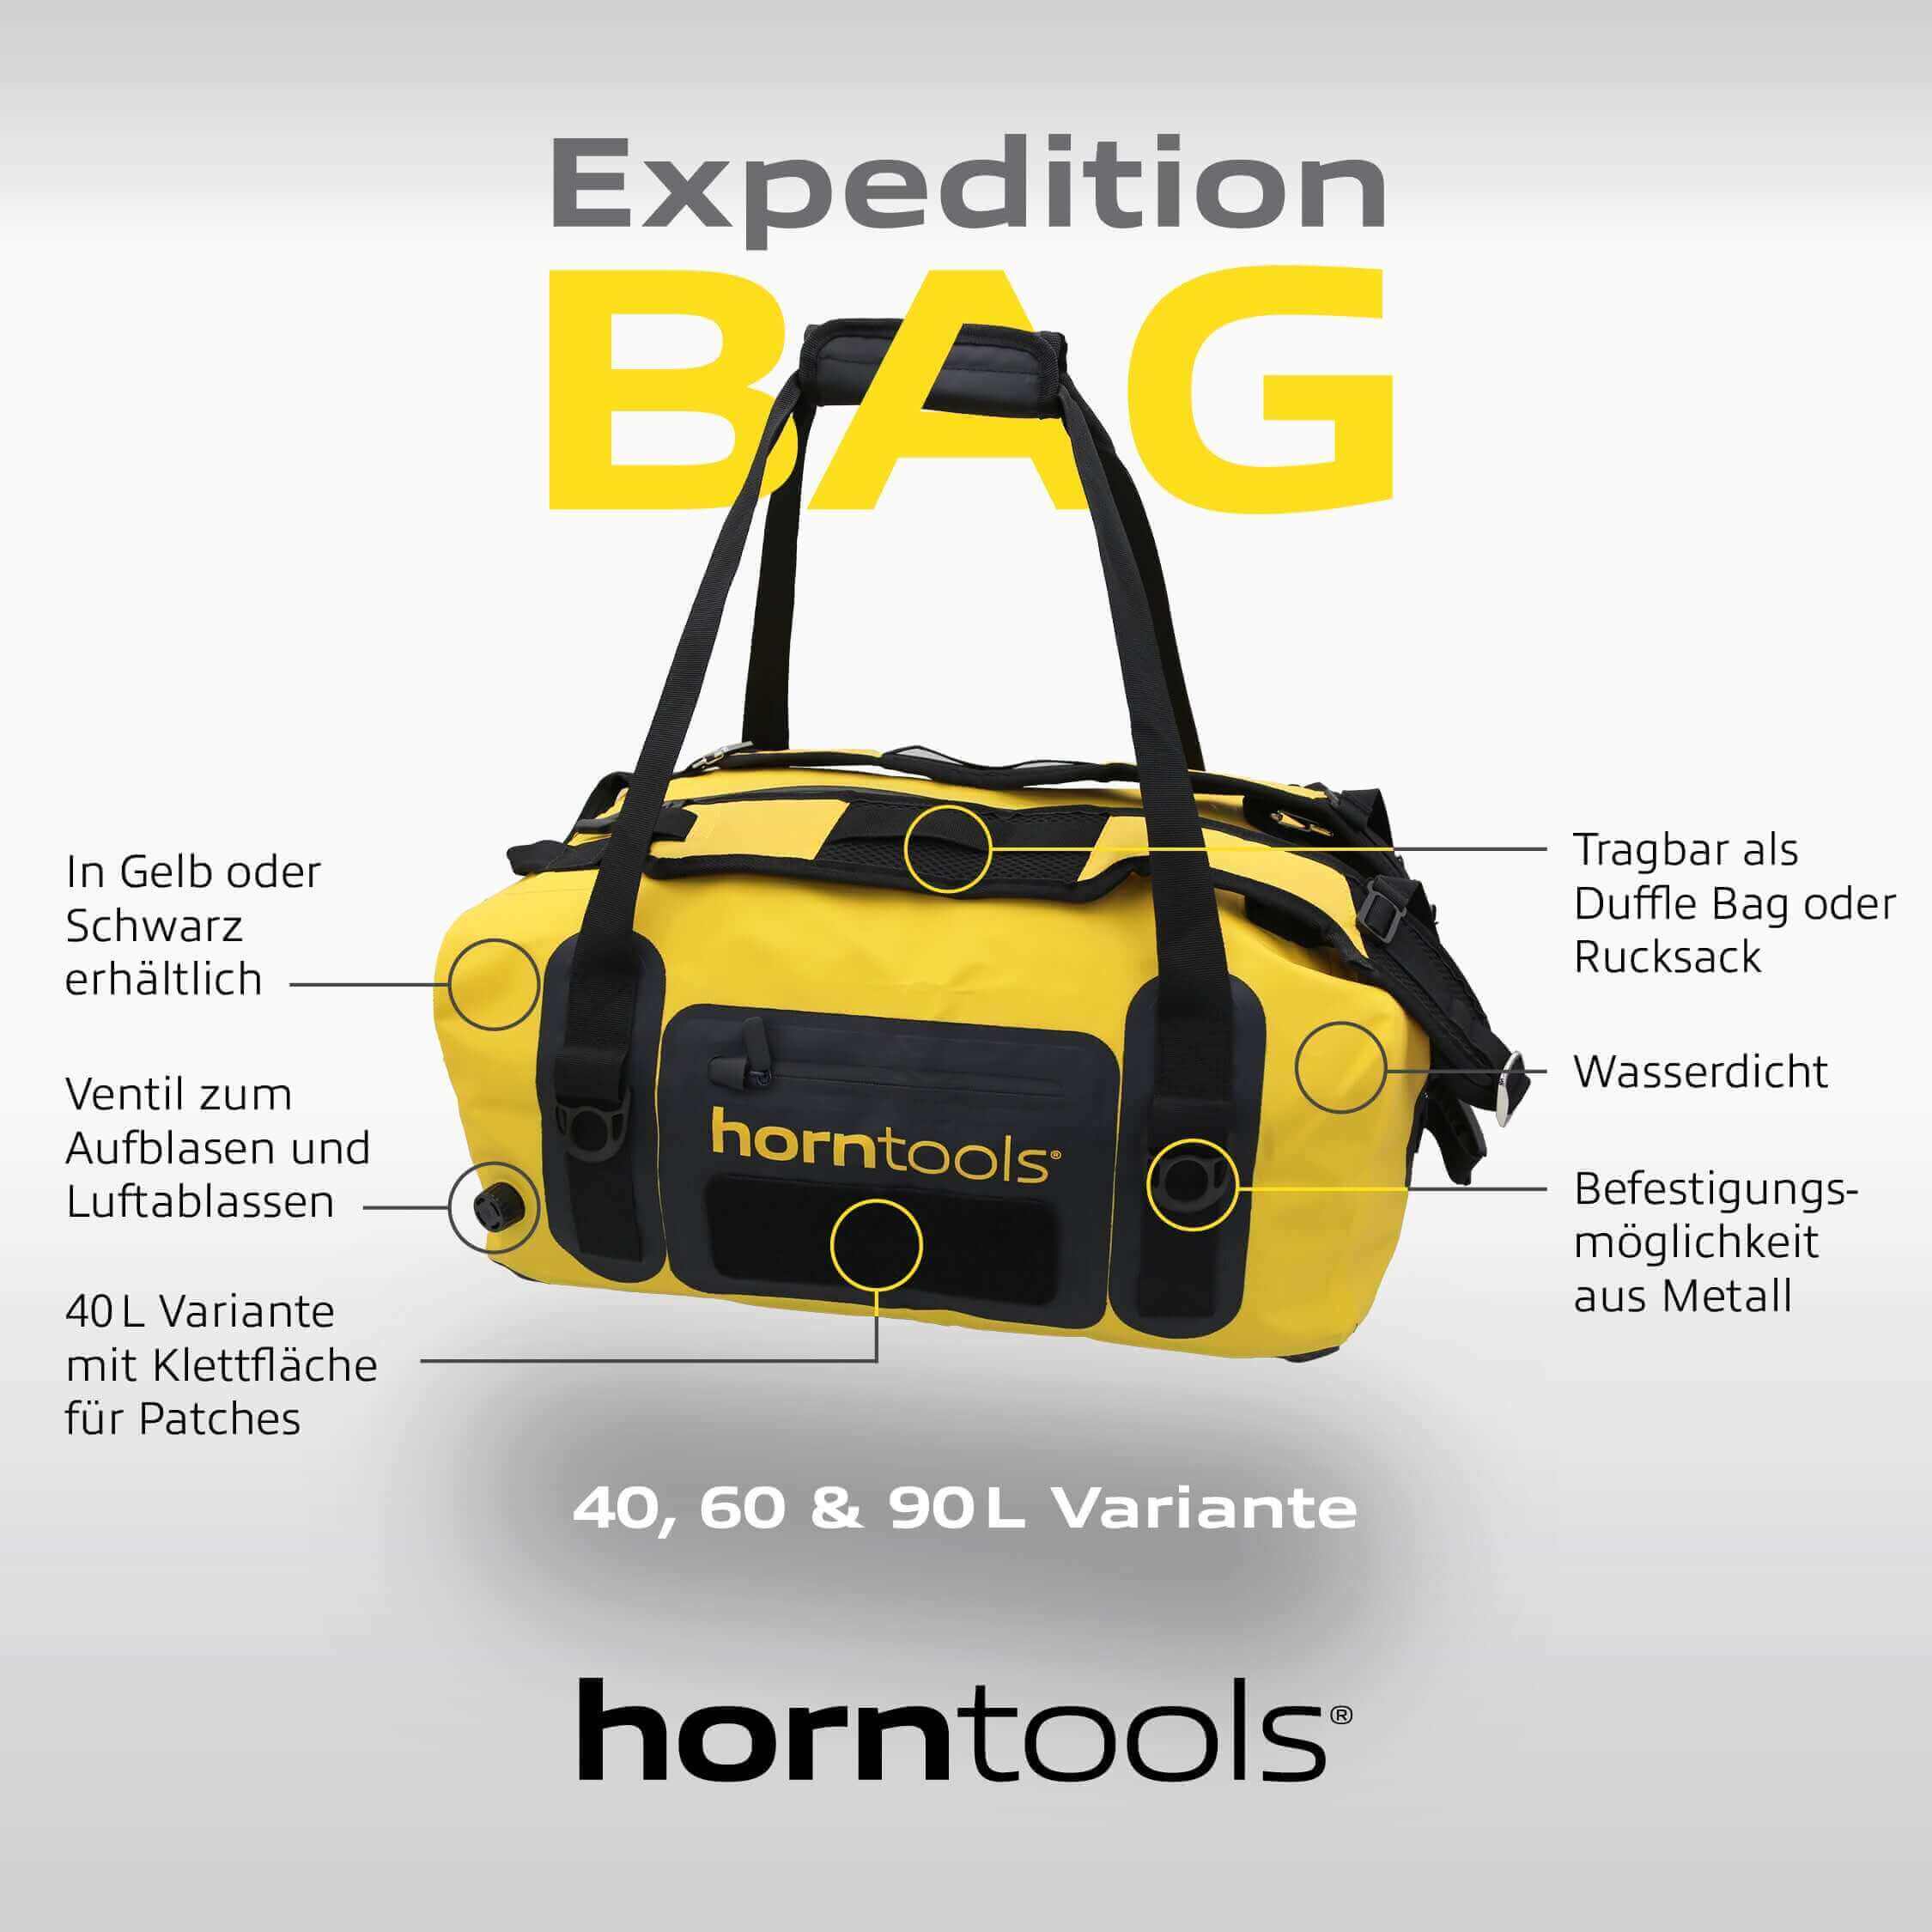 Expedition bag - waterproof bag